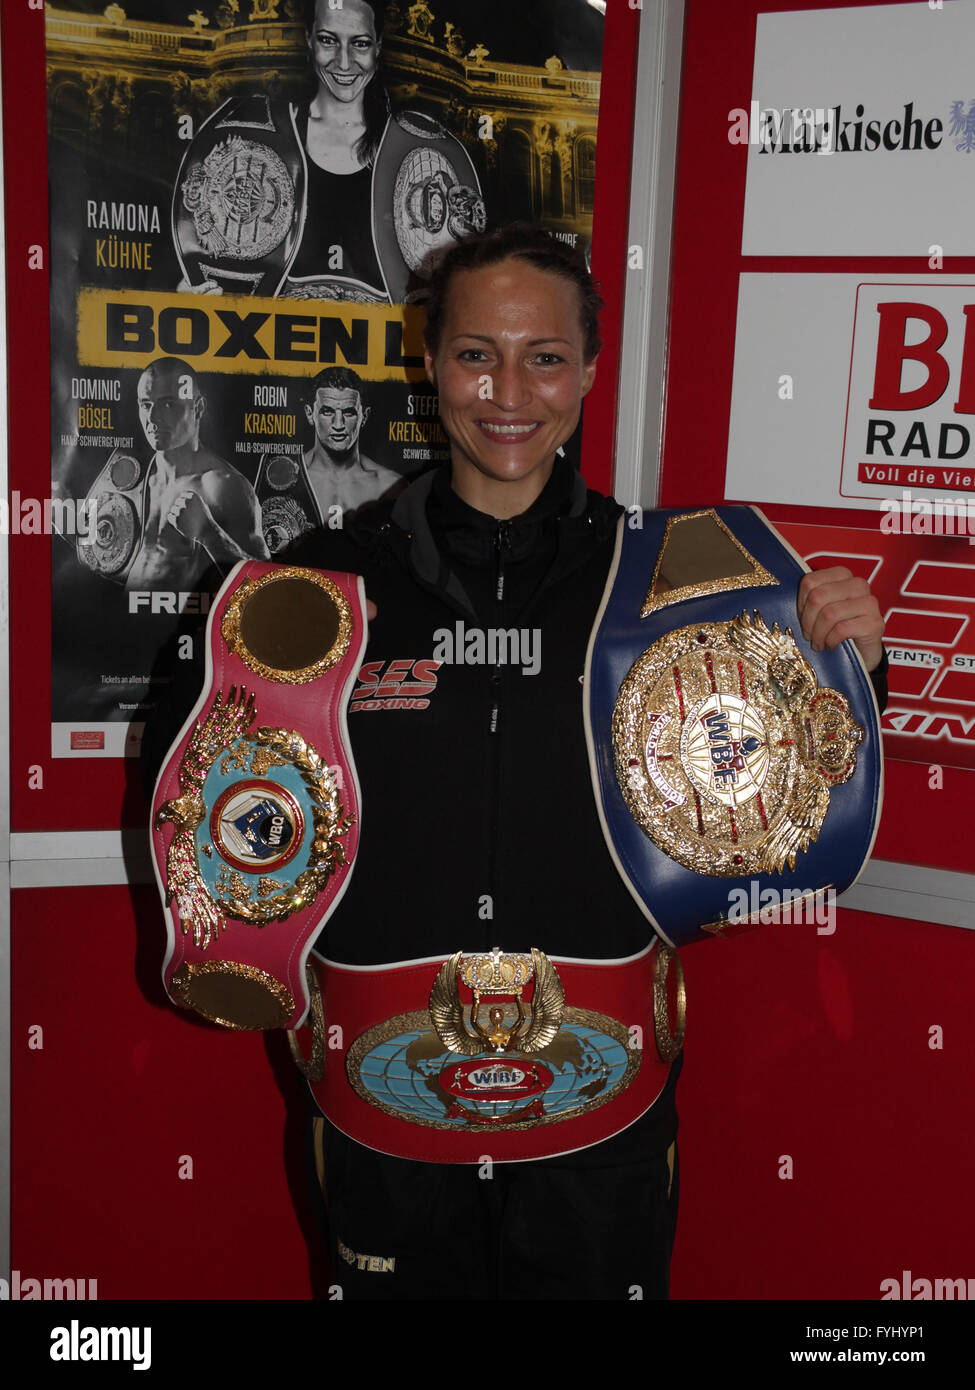 Boxing World Champion Ramona Kühne Stock Photo